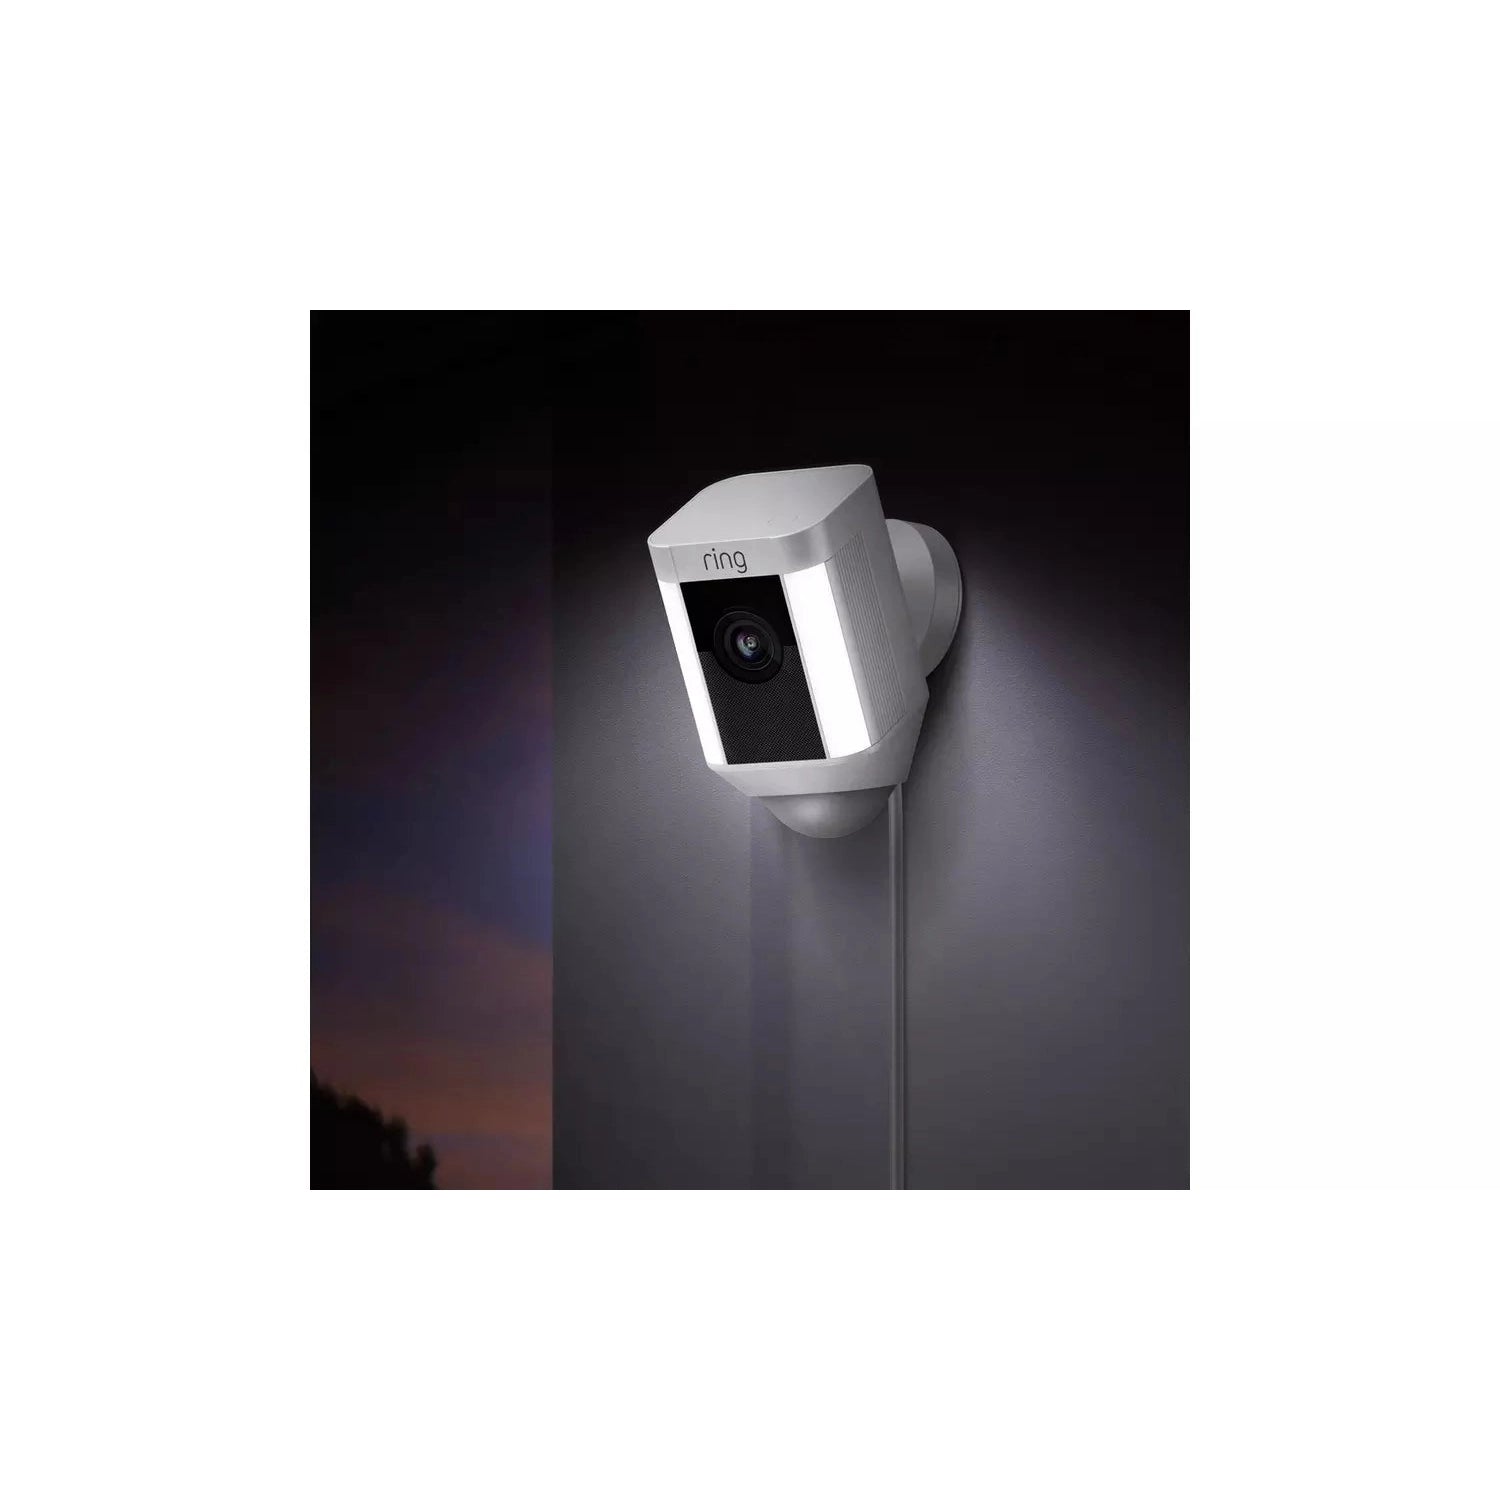 Ring Spotlight Cam Wired Security Camera - White - Refurbished Pristine